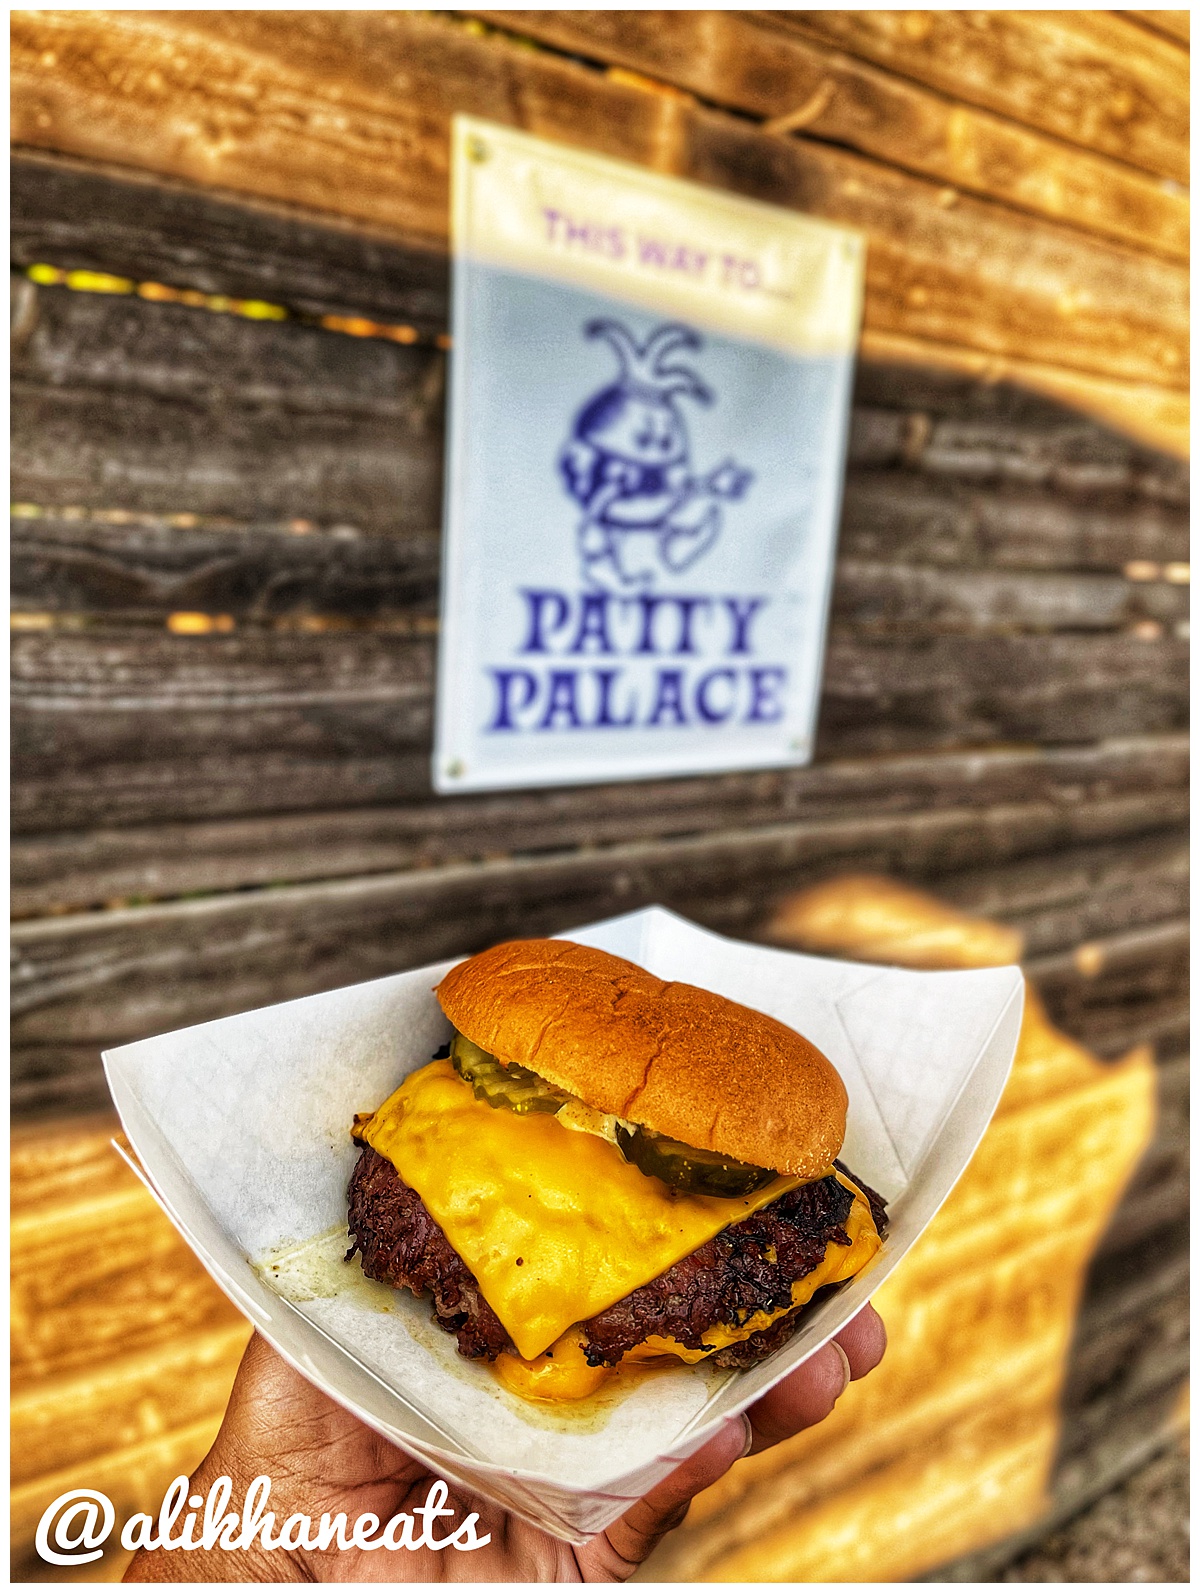 Patty Palace burger